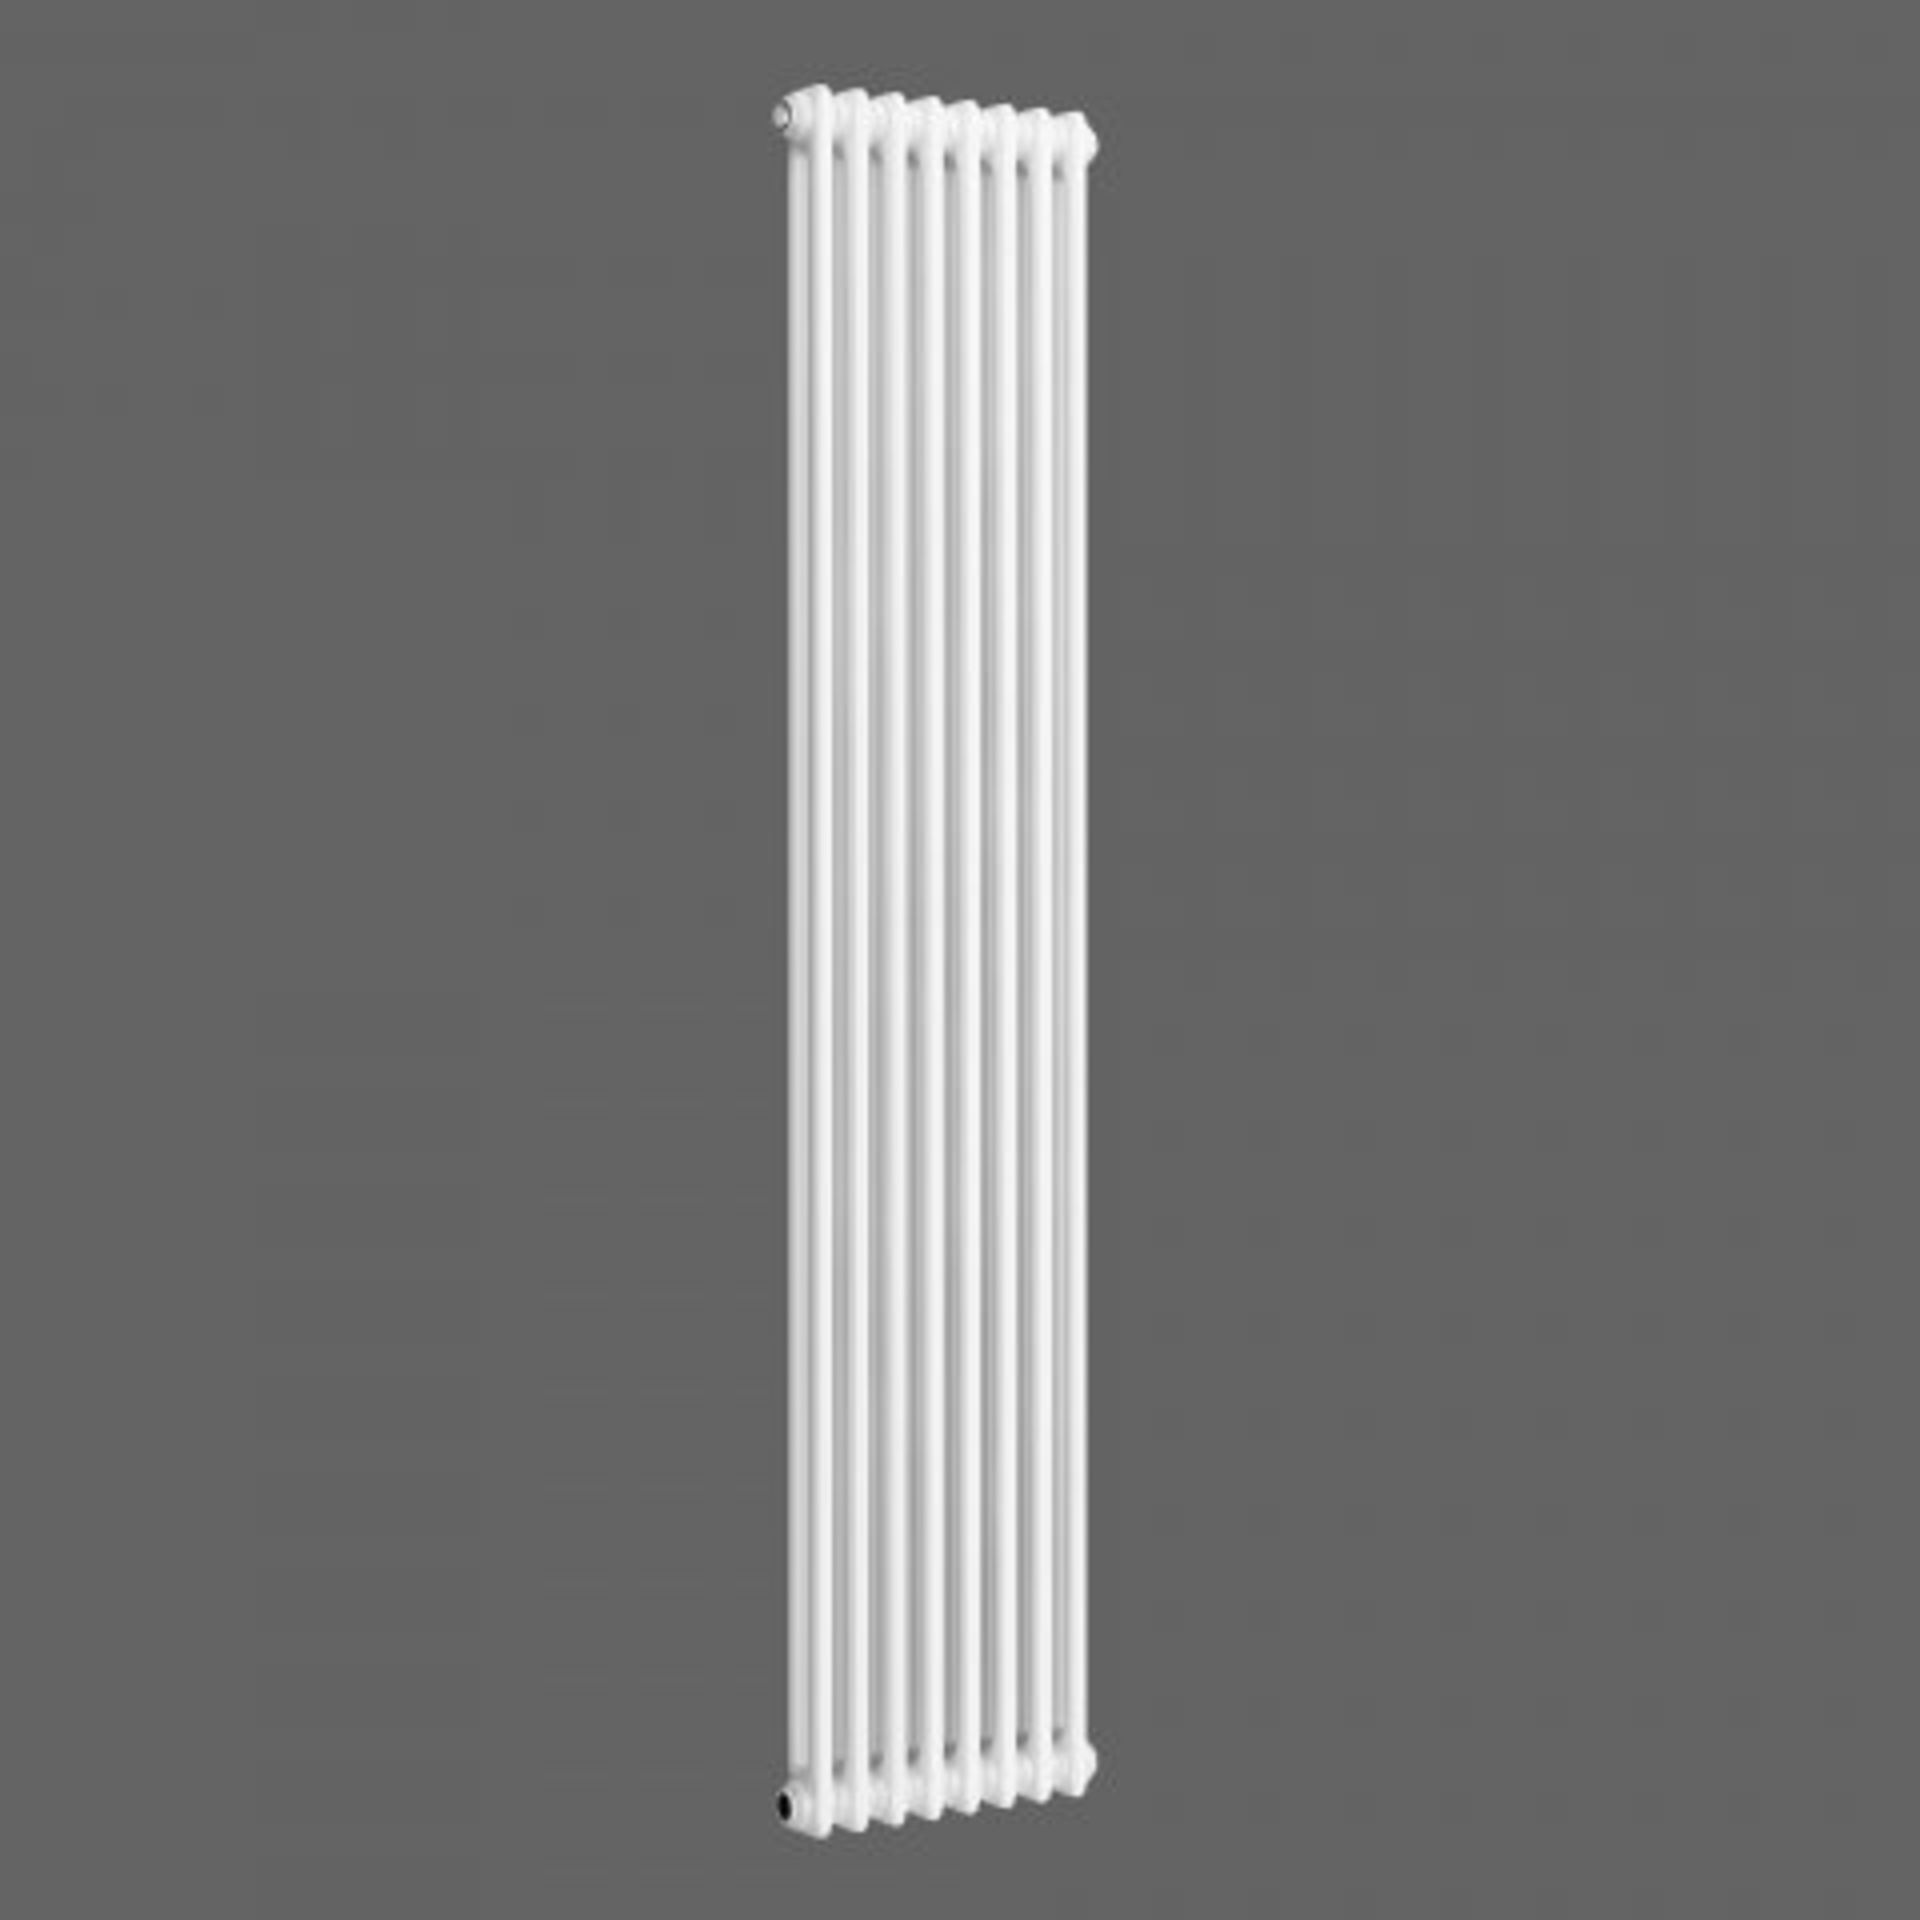 (I2) 1800x380mm White Double Panel Vertical Colosseum Radiator - Roma Premium. RRP £255.99. - Image 3 of 5